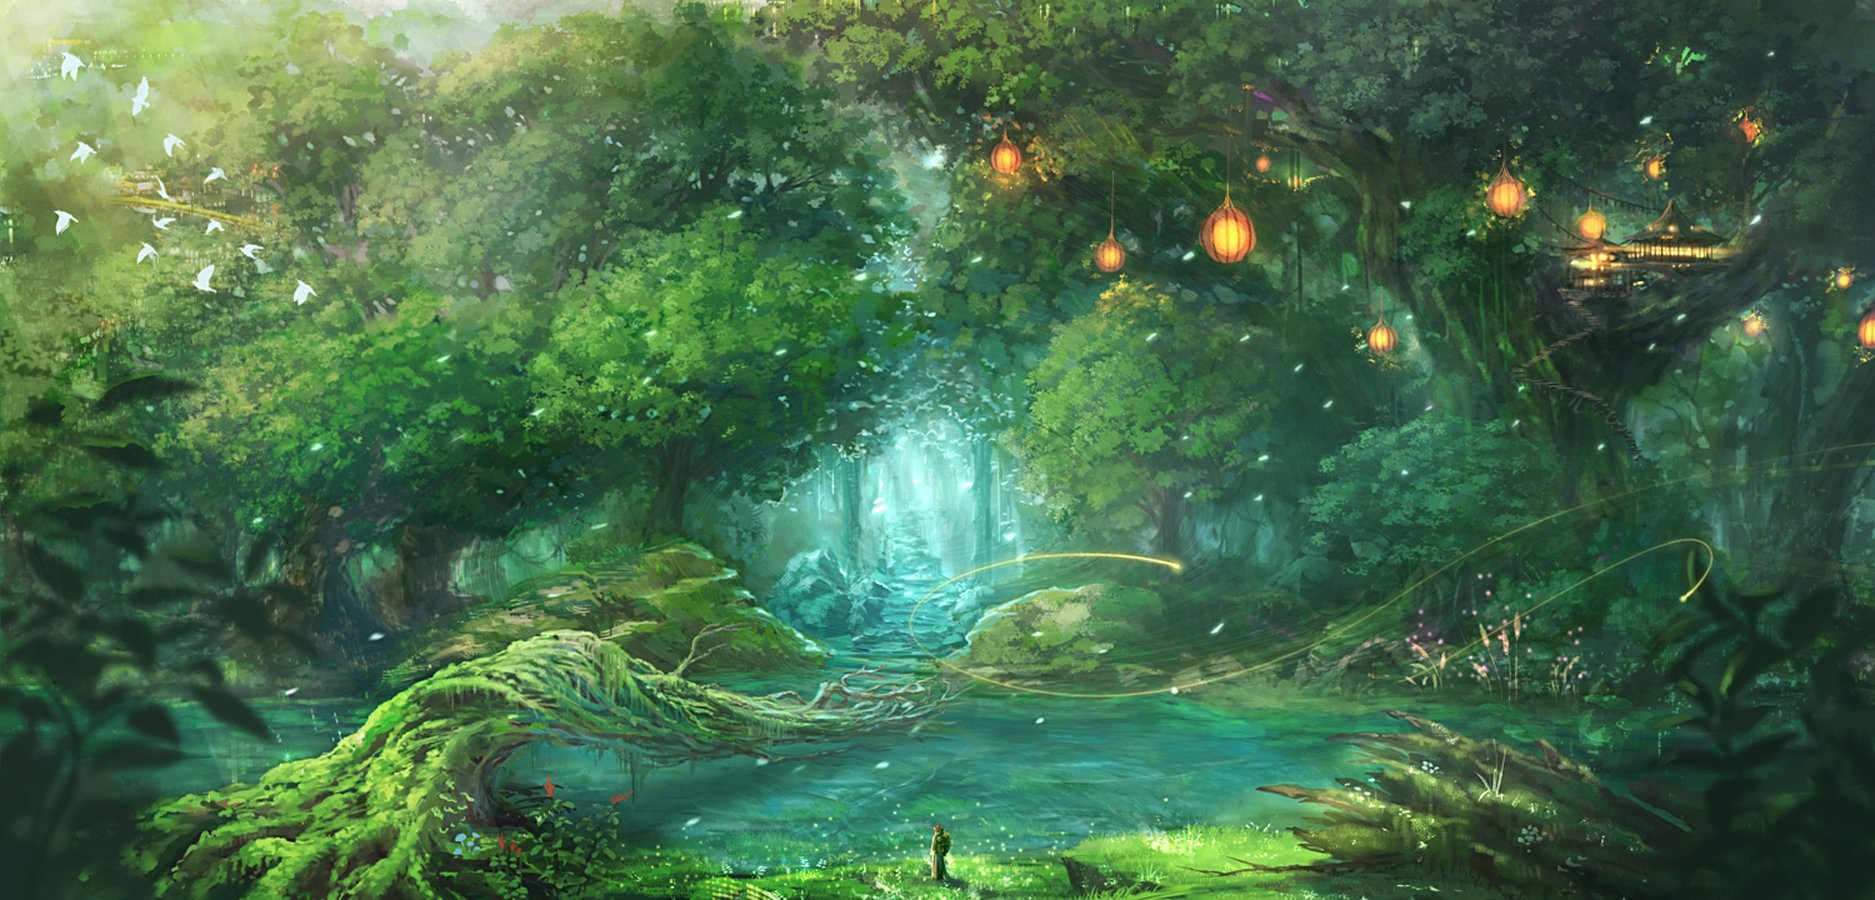 Original Anime Forest Landscape Wallpapers Hd Desktop And Mobile Backgrounds